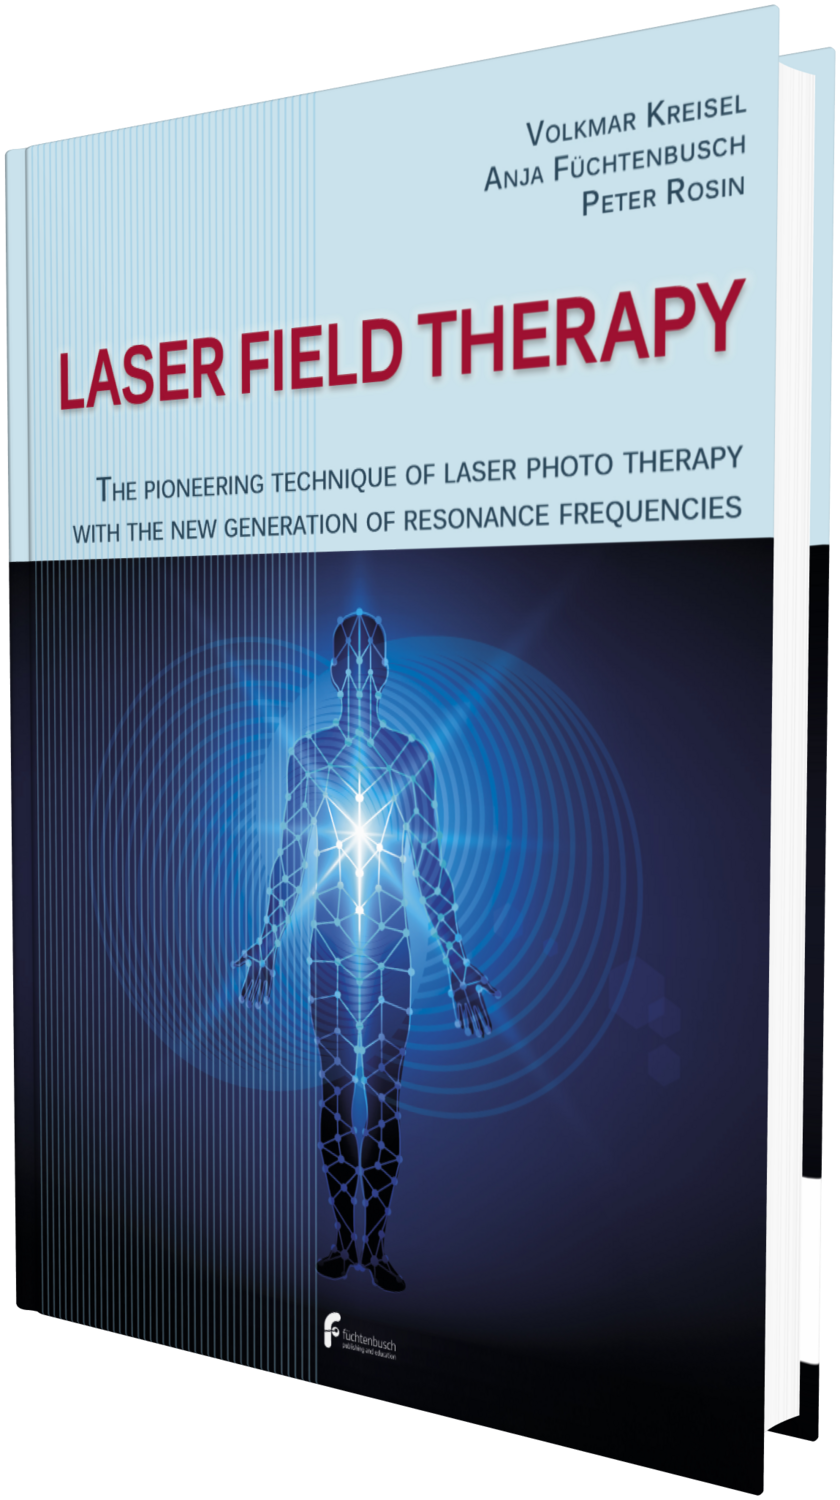 Laser Field Therapy" Book by Anja Fuchtenbusch, Volkmar Kreisel and Peter Rosen